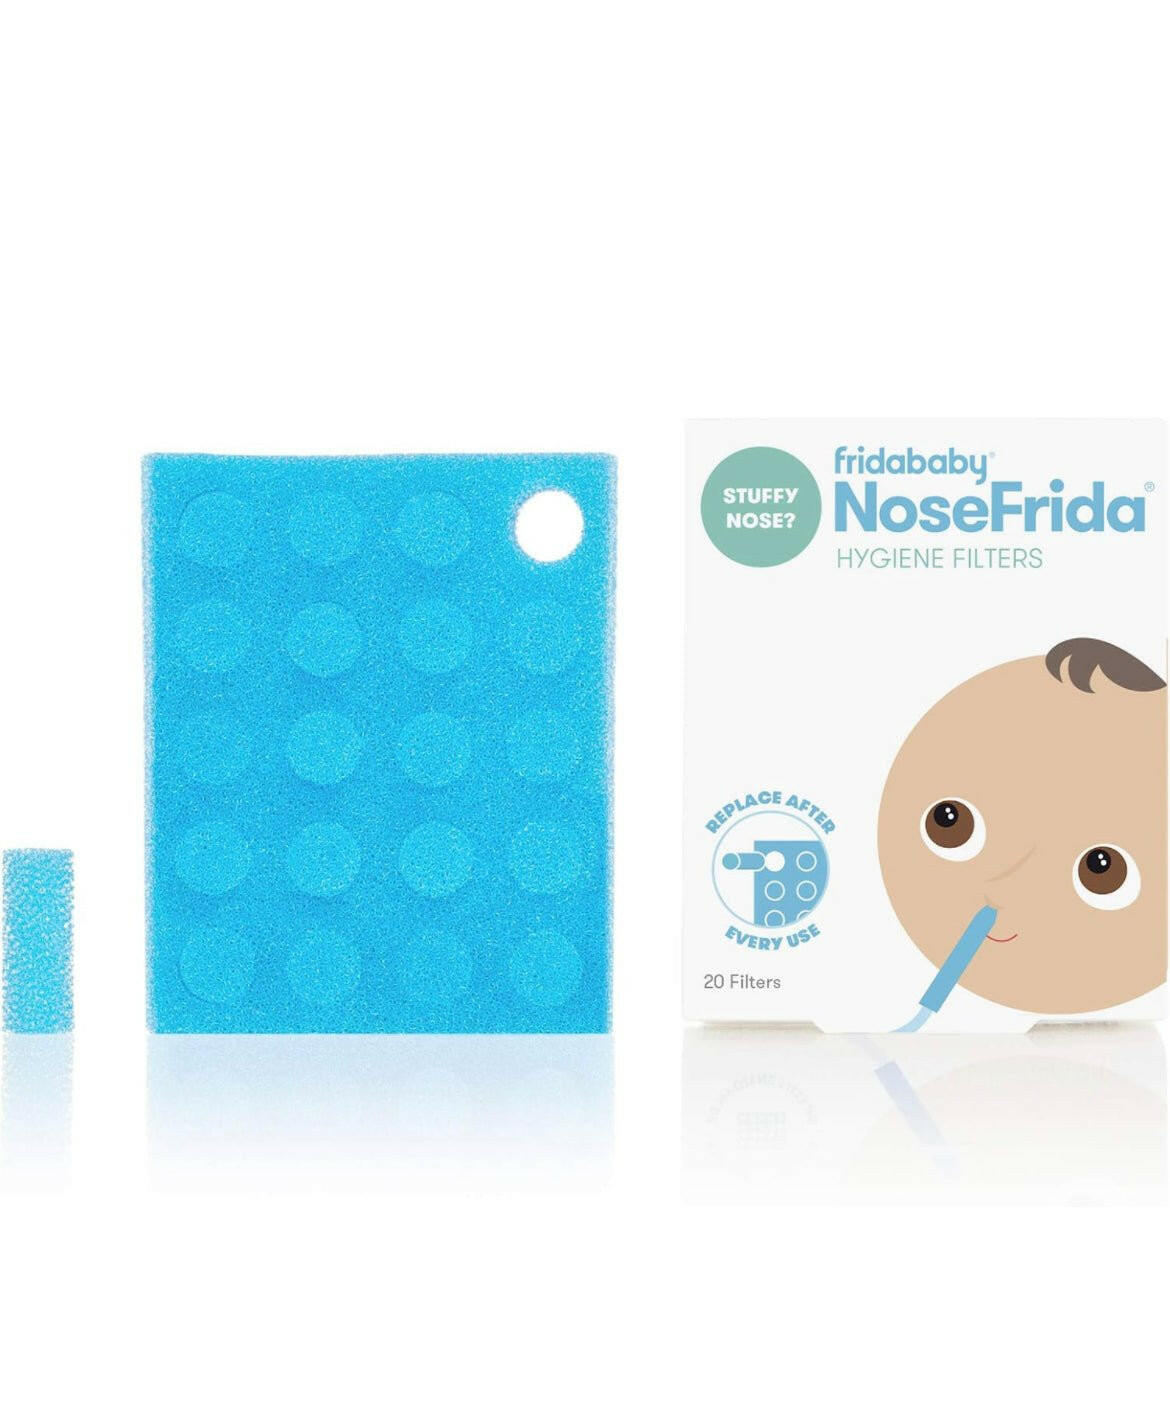 Nasal Aspirator 20 Hygiene Filters for NoseFrida The Snotsucker by Frida Baby.